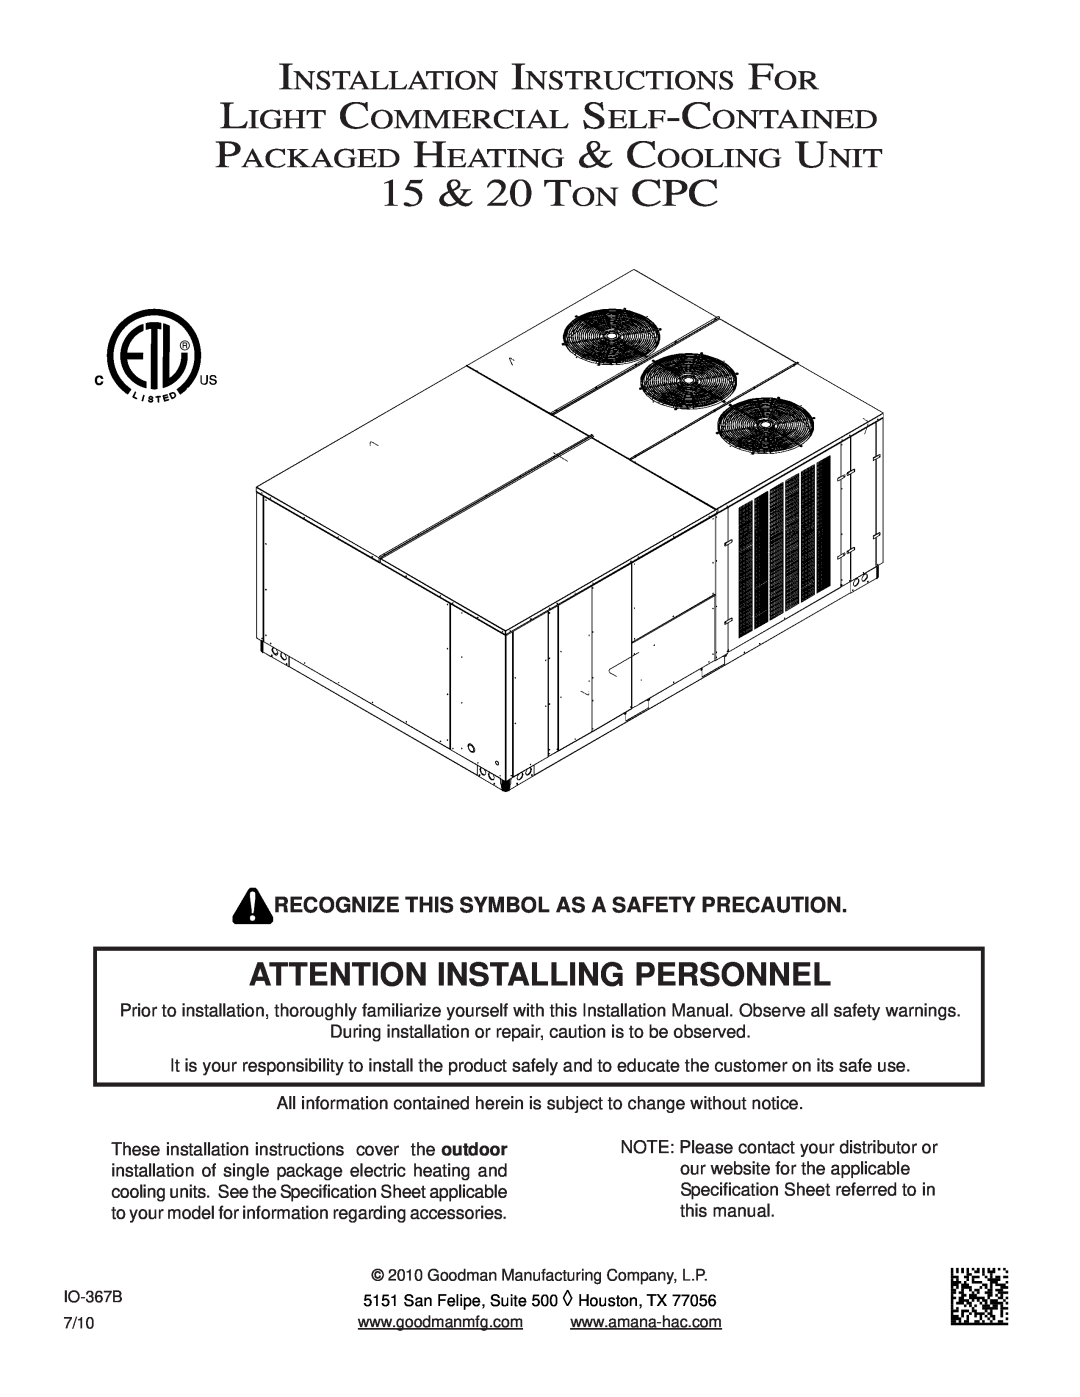 Goodman Mfg IO-367B installation instructions Recognize This Symbol As A Safety Precaution, 15 & 20 TON CPC 